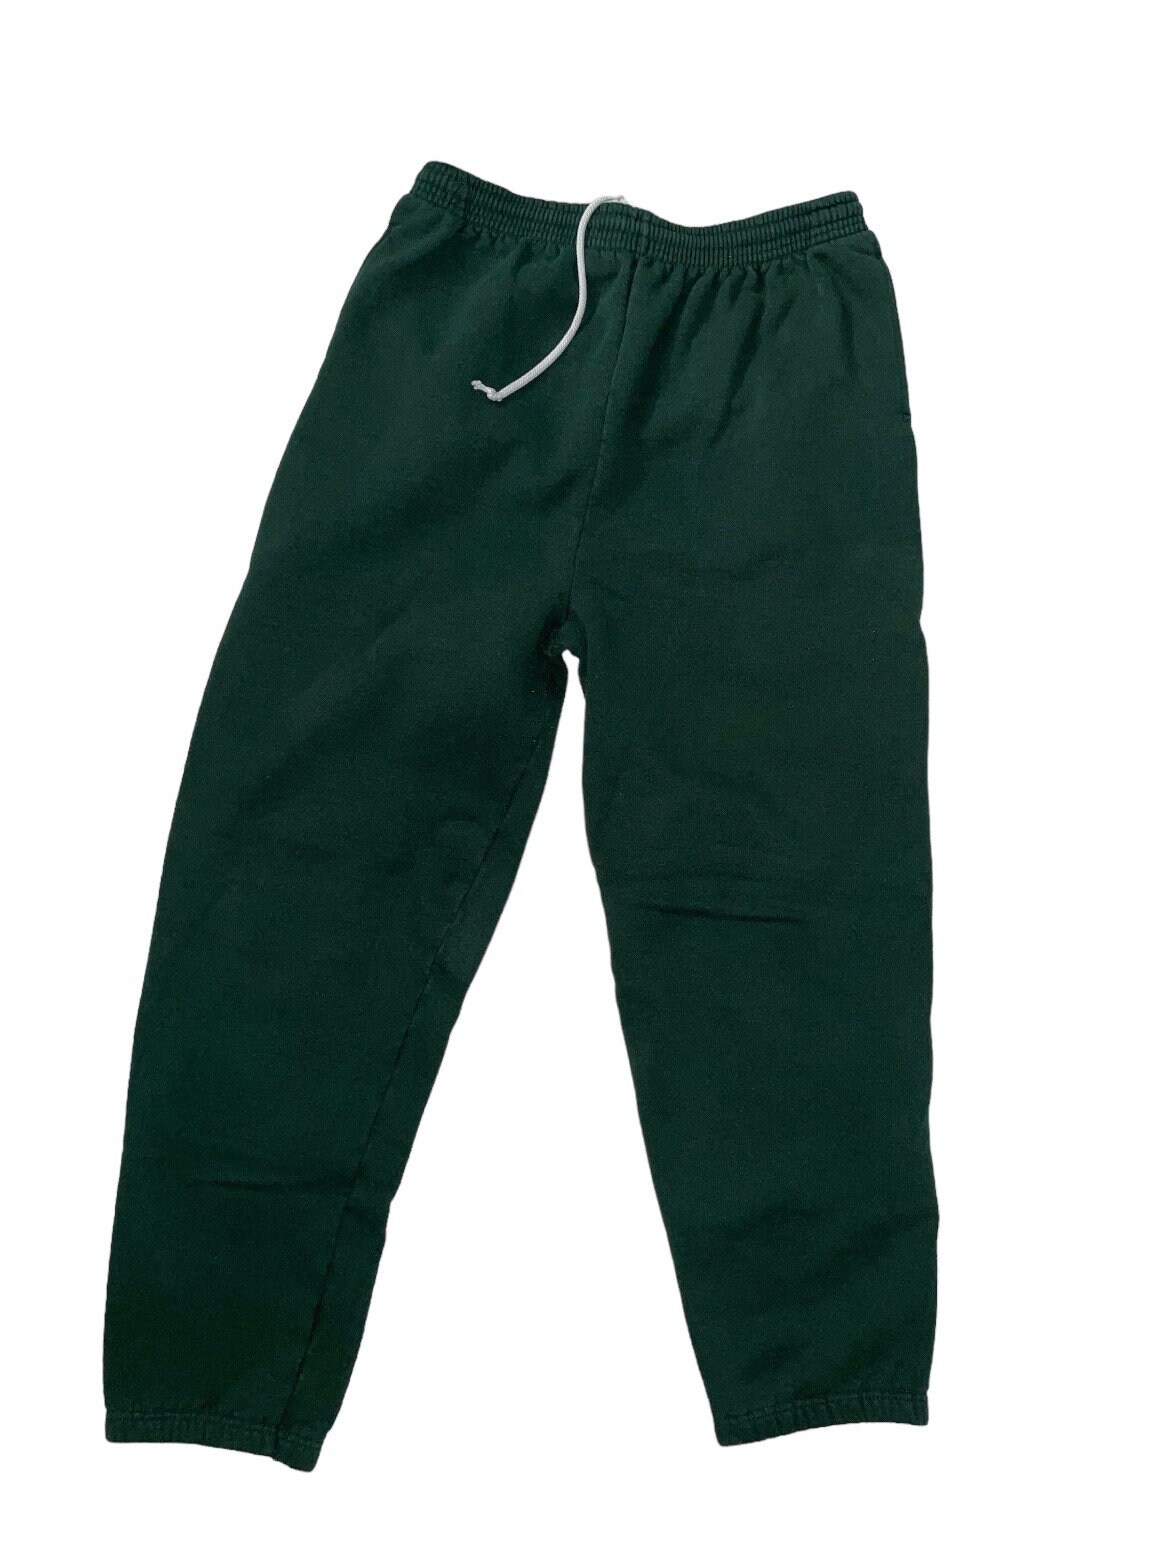 Dark Green Sweatpants, Baggy Sweat Pant Man Woman, Drop Crotch